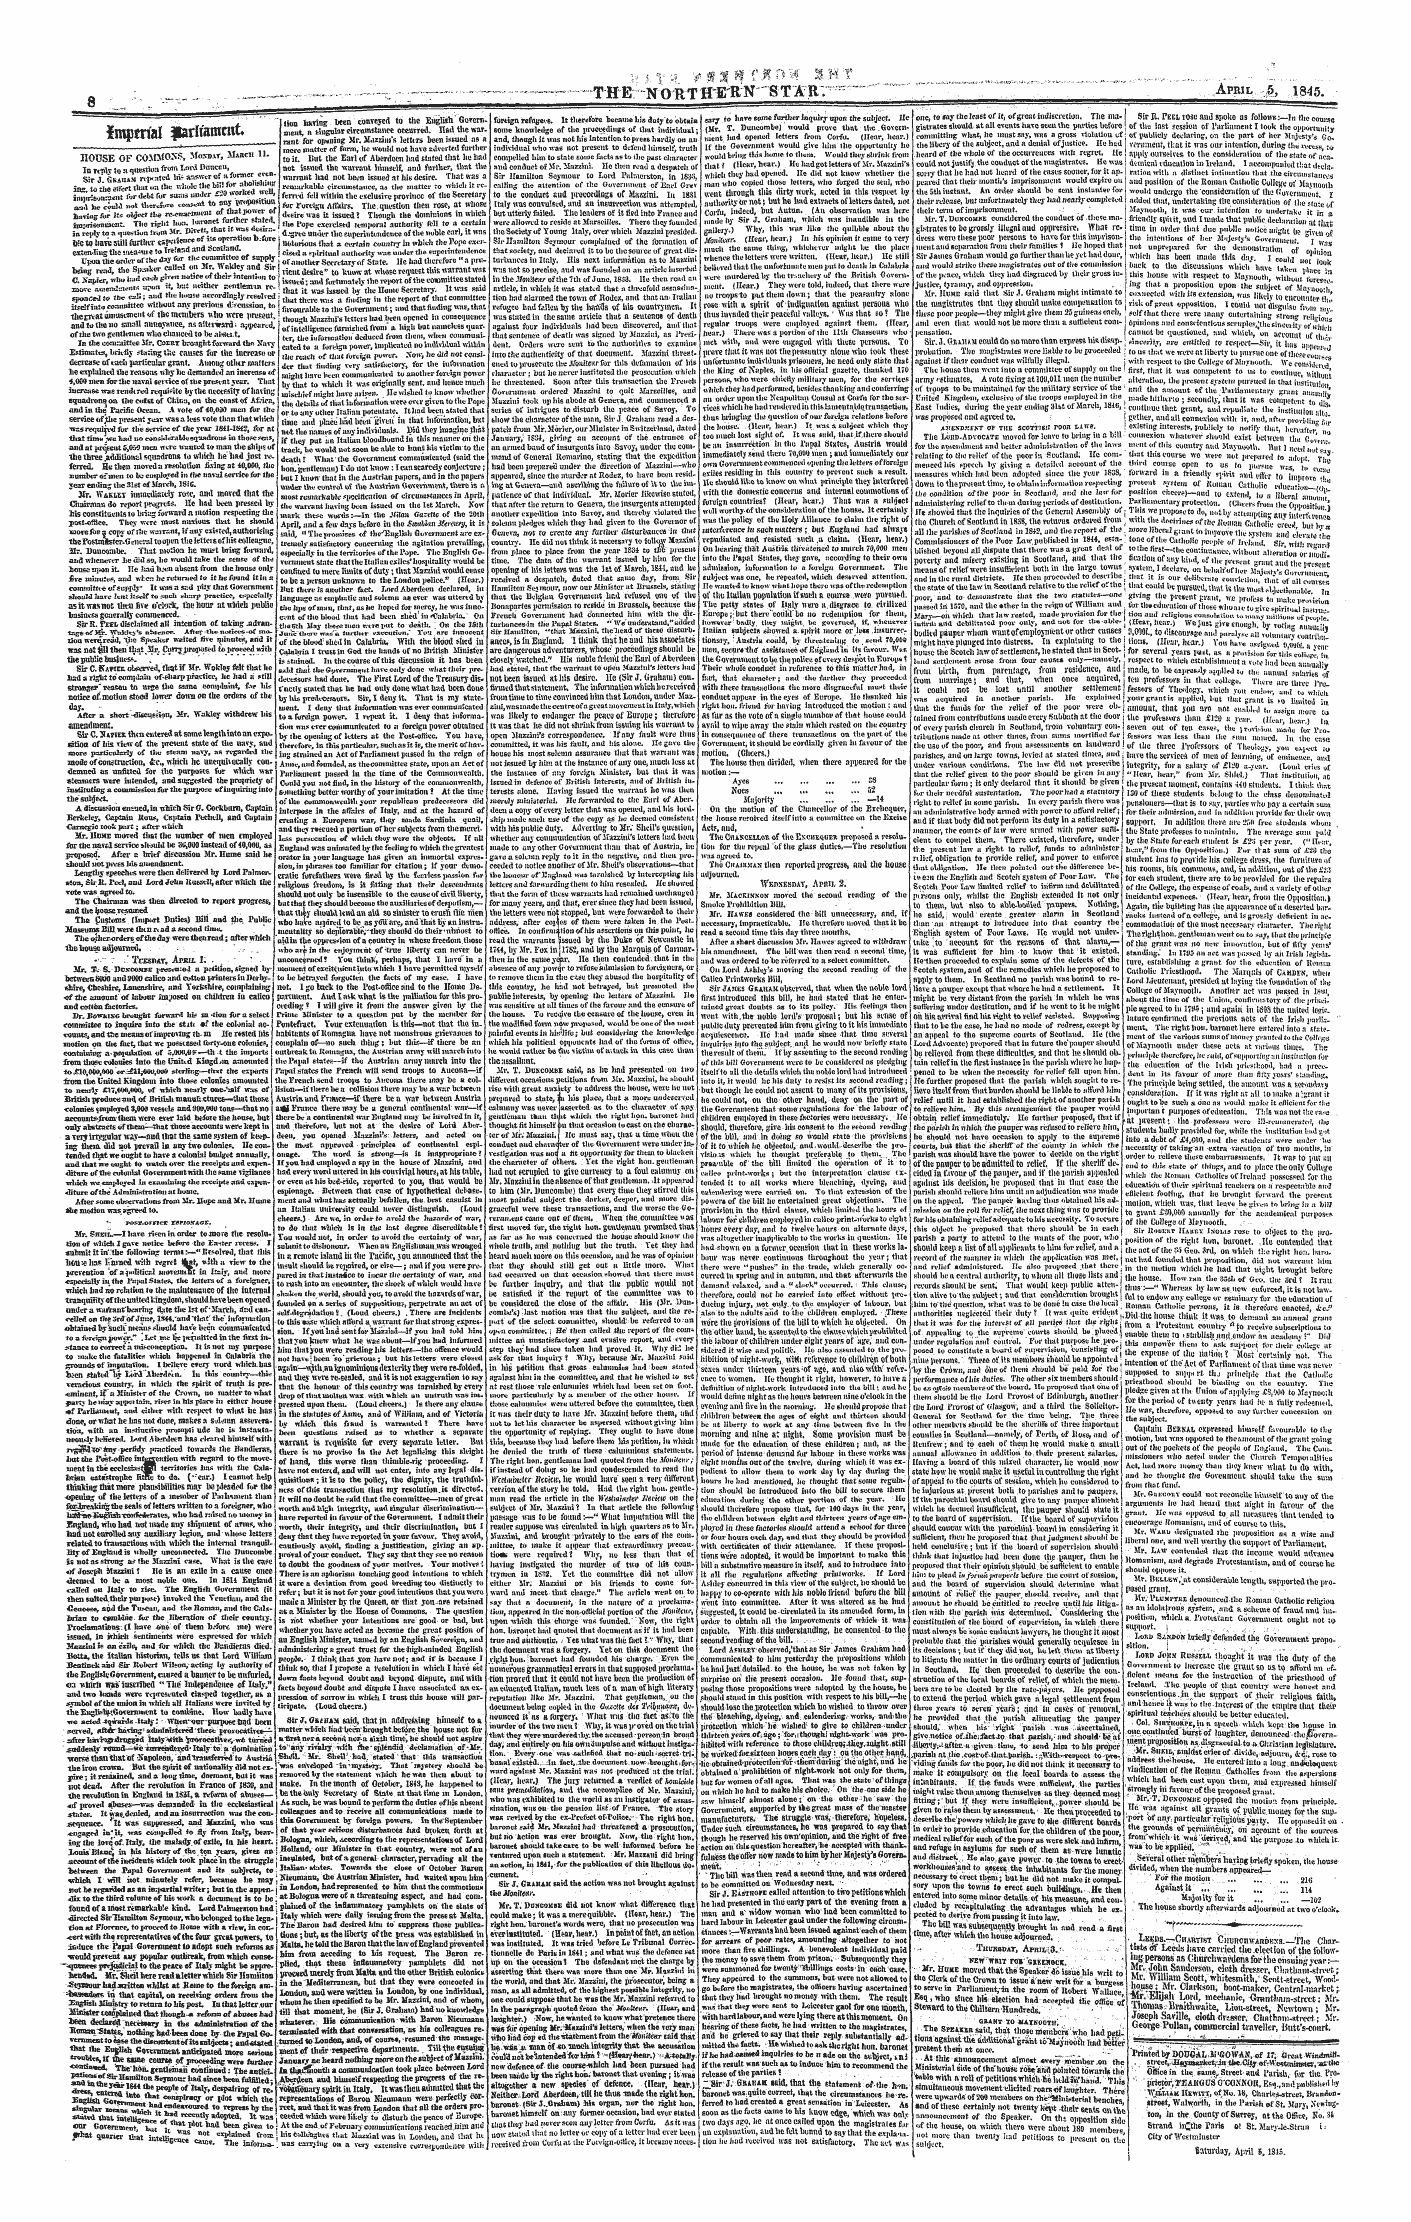 Northern Star (1837-1852): jS F Y, 1st edition - Pr Inted By Dougalji'60 Wan, Of 17; Great-Wuntaua-, . Street, ^*Ymark«T, -Jn Ibe City Ofrw;E%Tmiwter,«Ttl*E